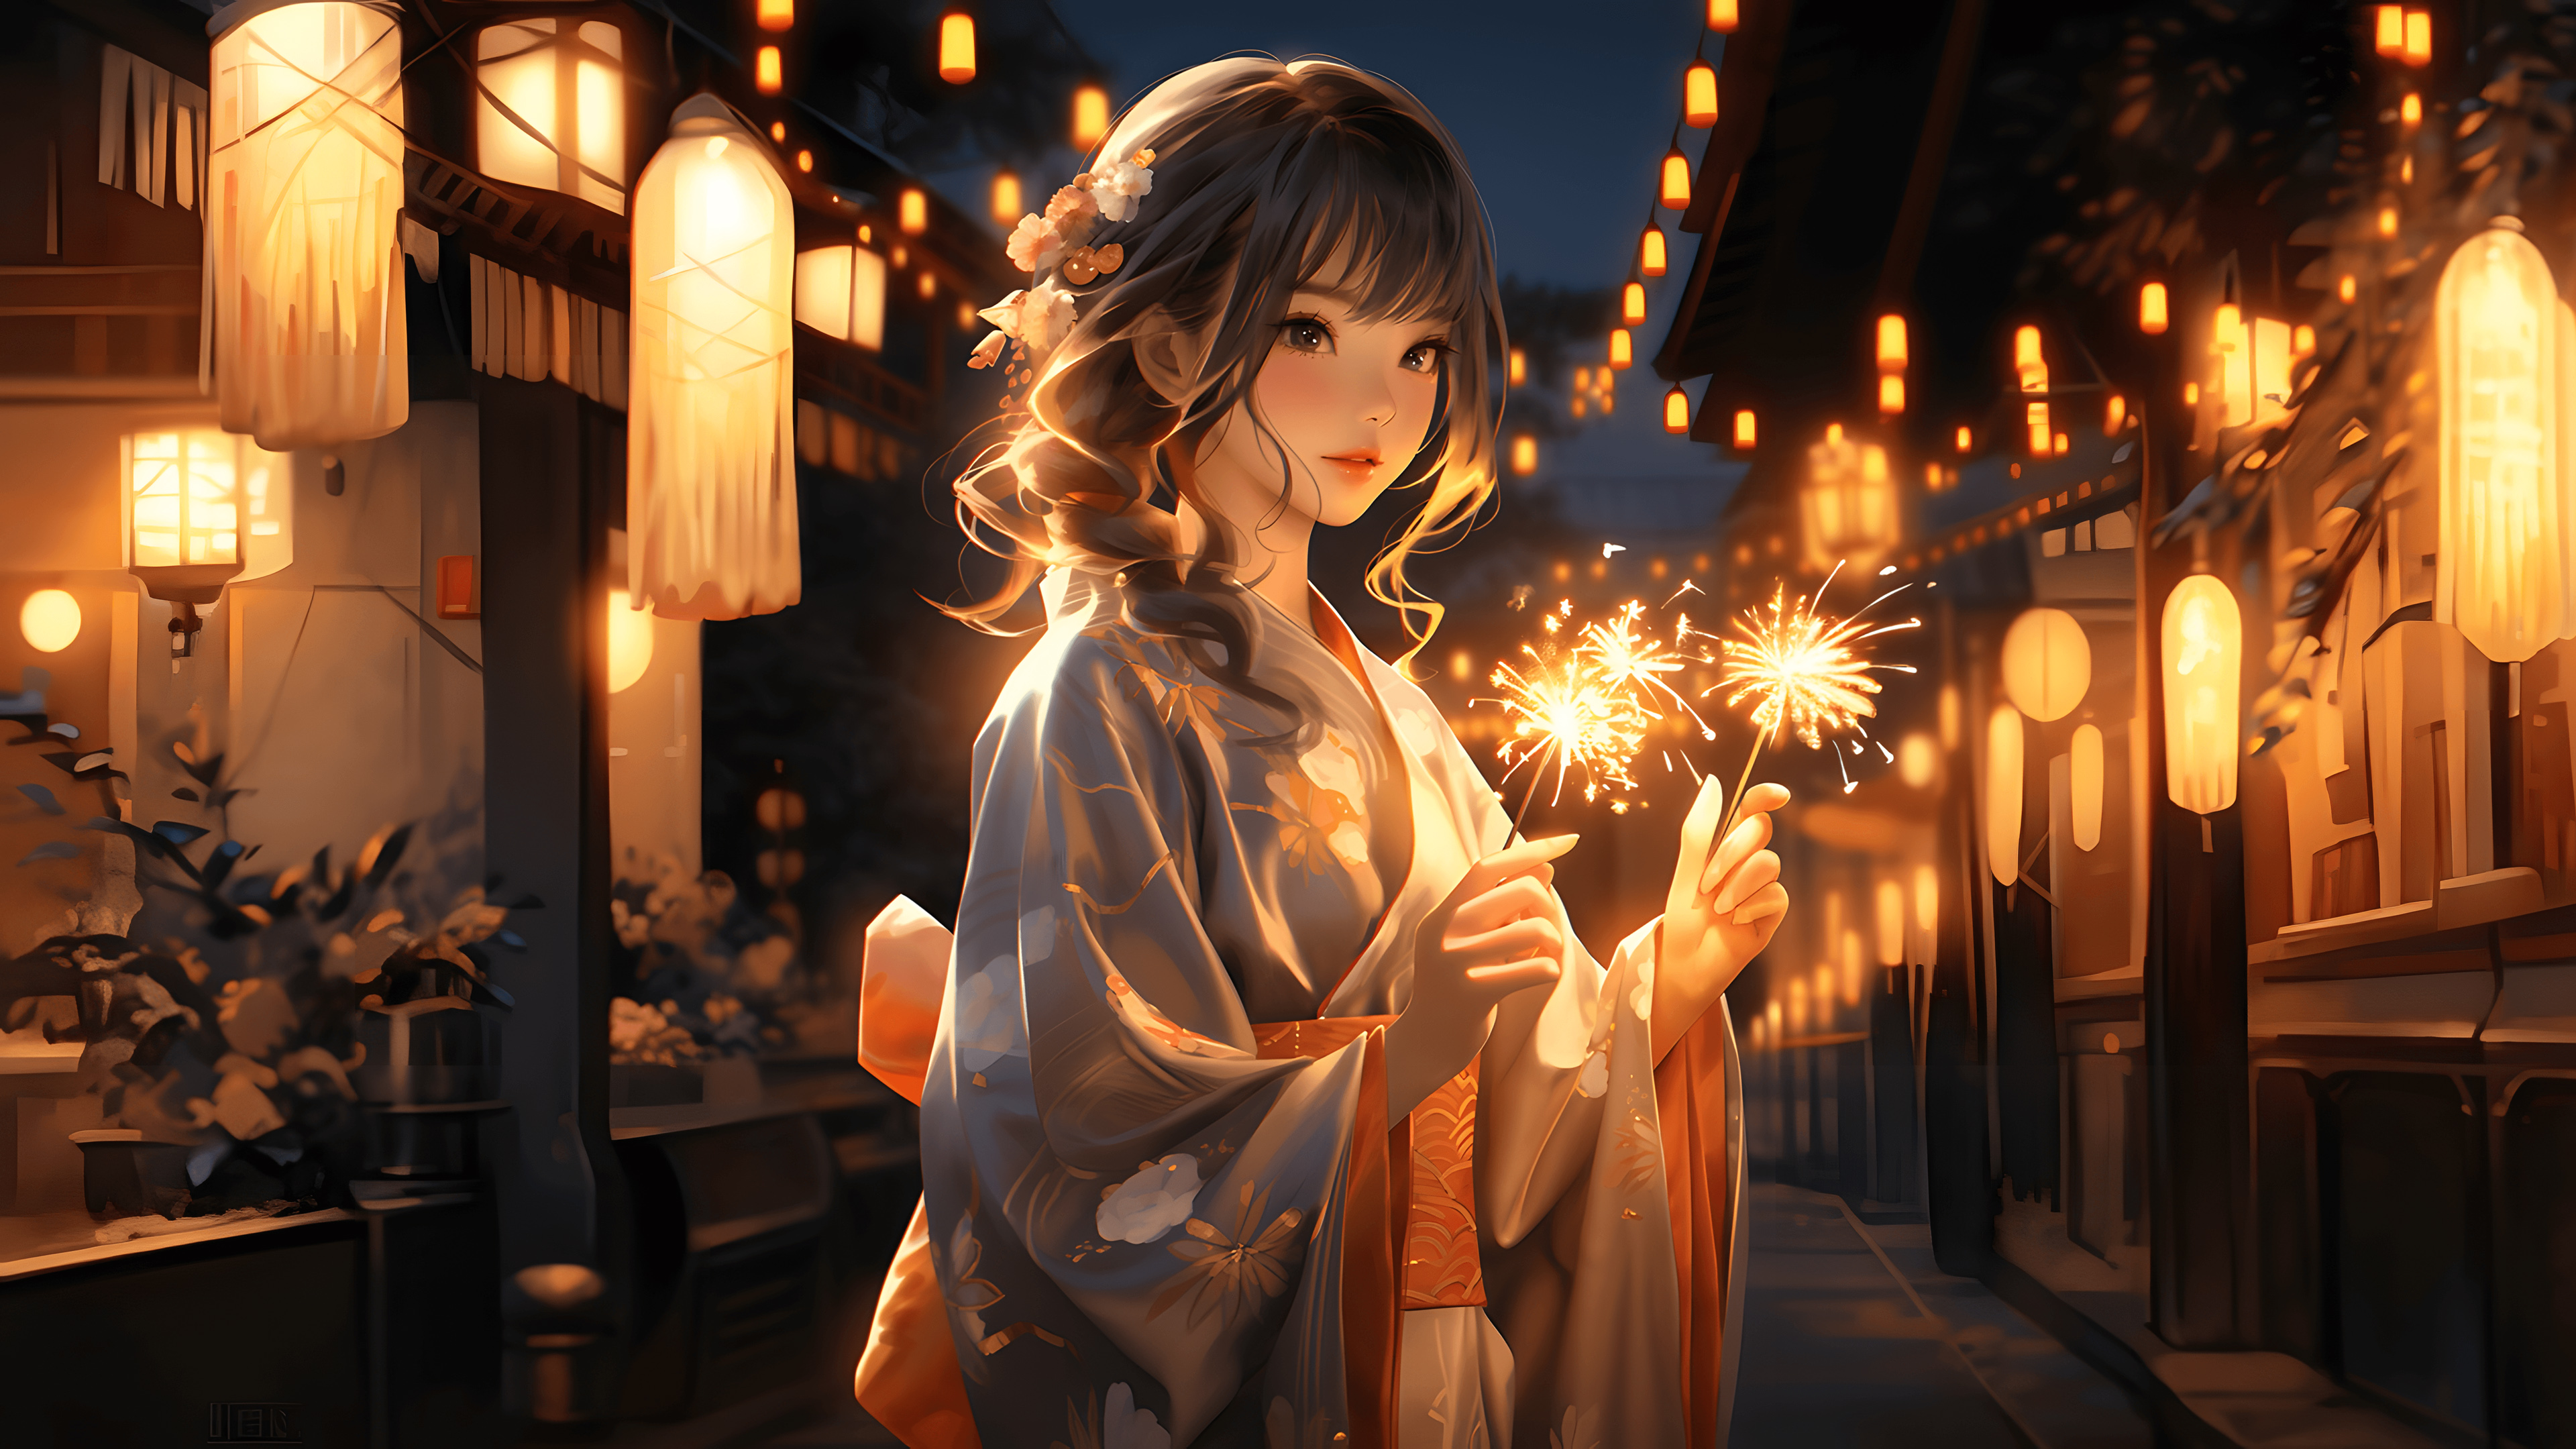 General 3840x2160 AI art women digital art Asian short hair kimono lights looking at viewer fireworks building standing flower in hair blurred blurry background night flowers